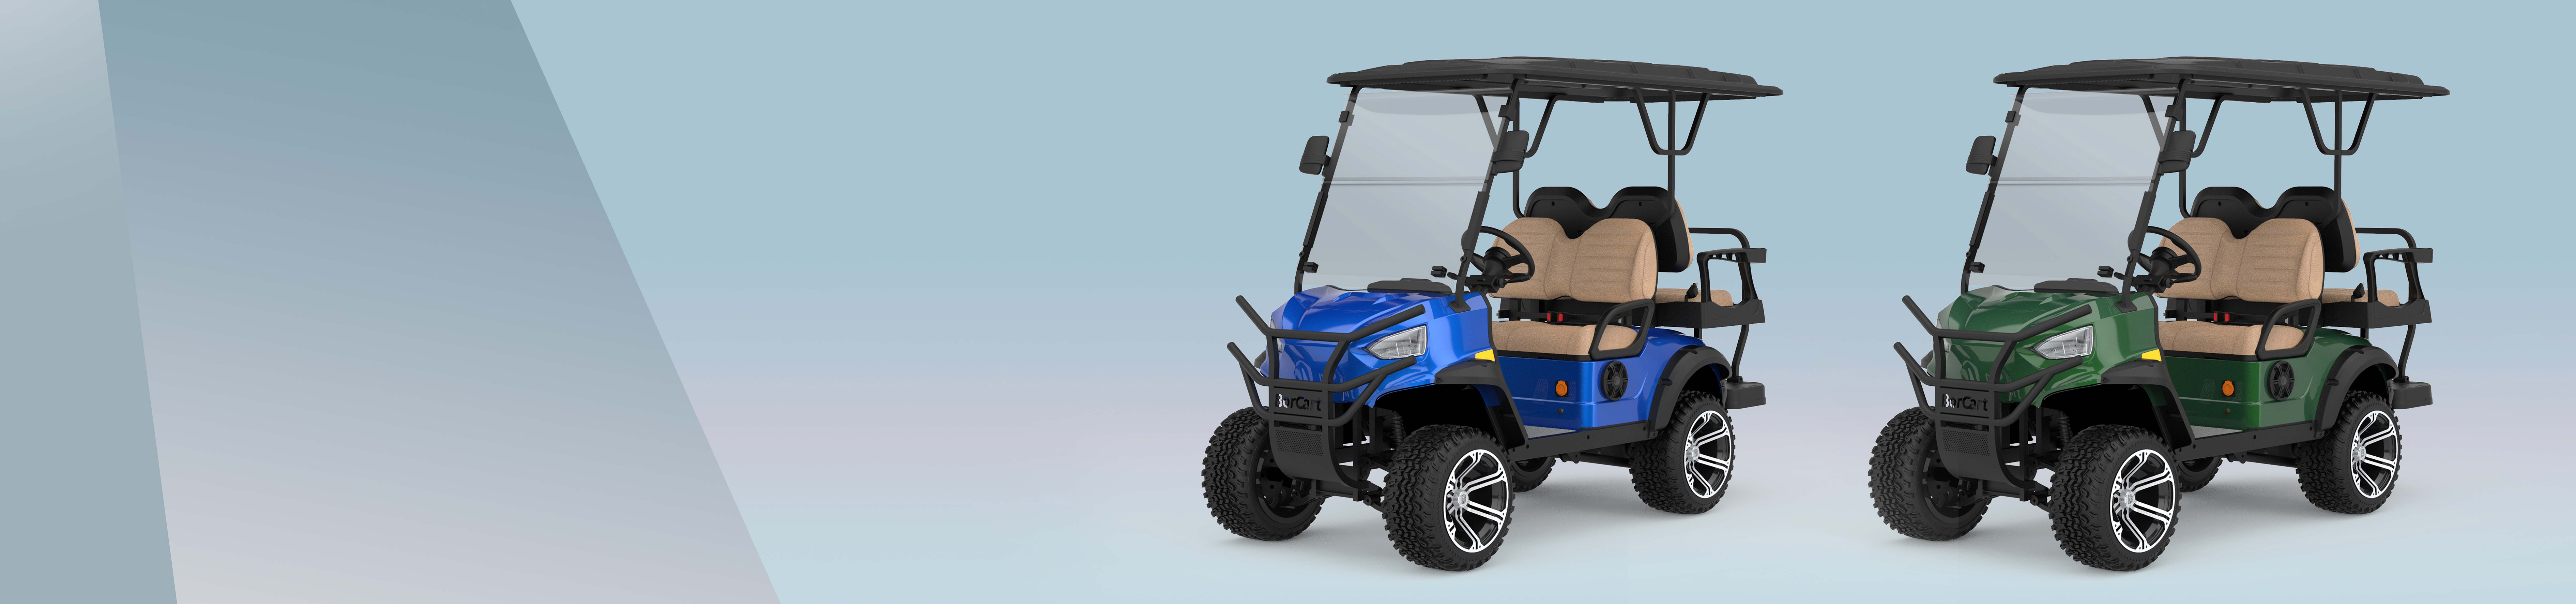 golf cart
personal cart
vehicle
Utility Vehicle
Classic Vehicle
